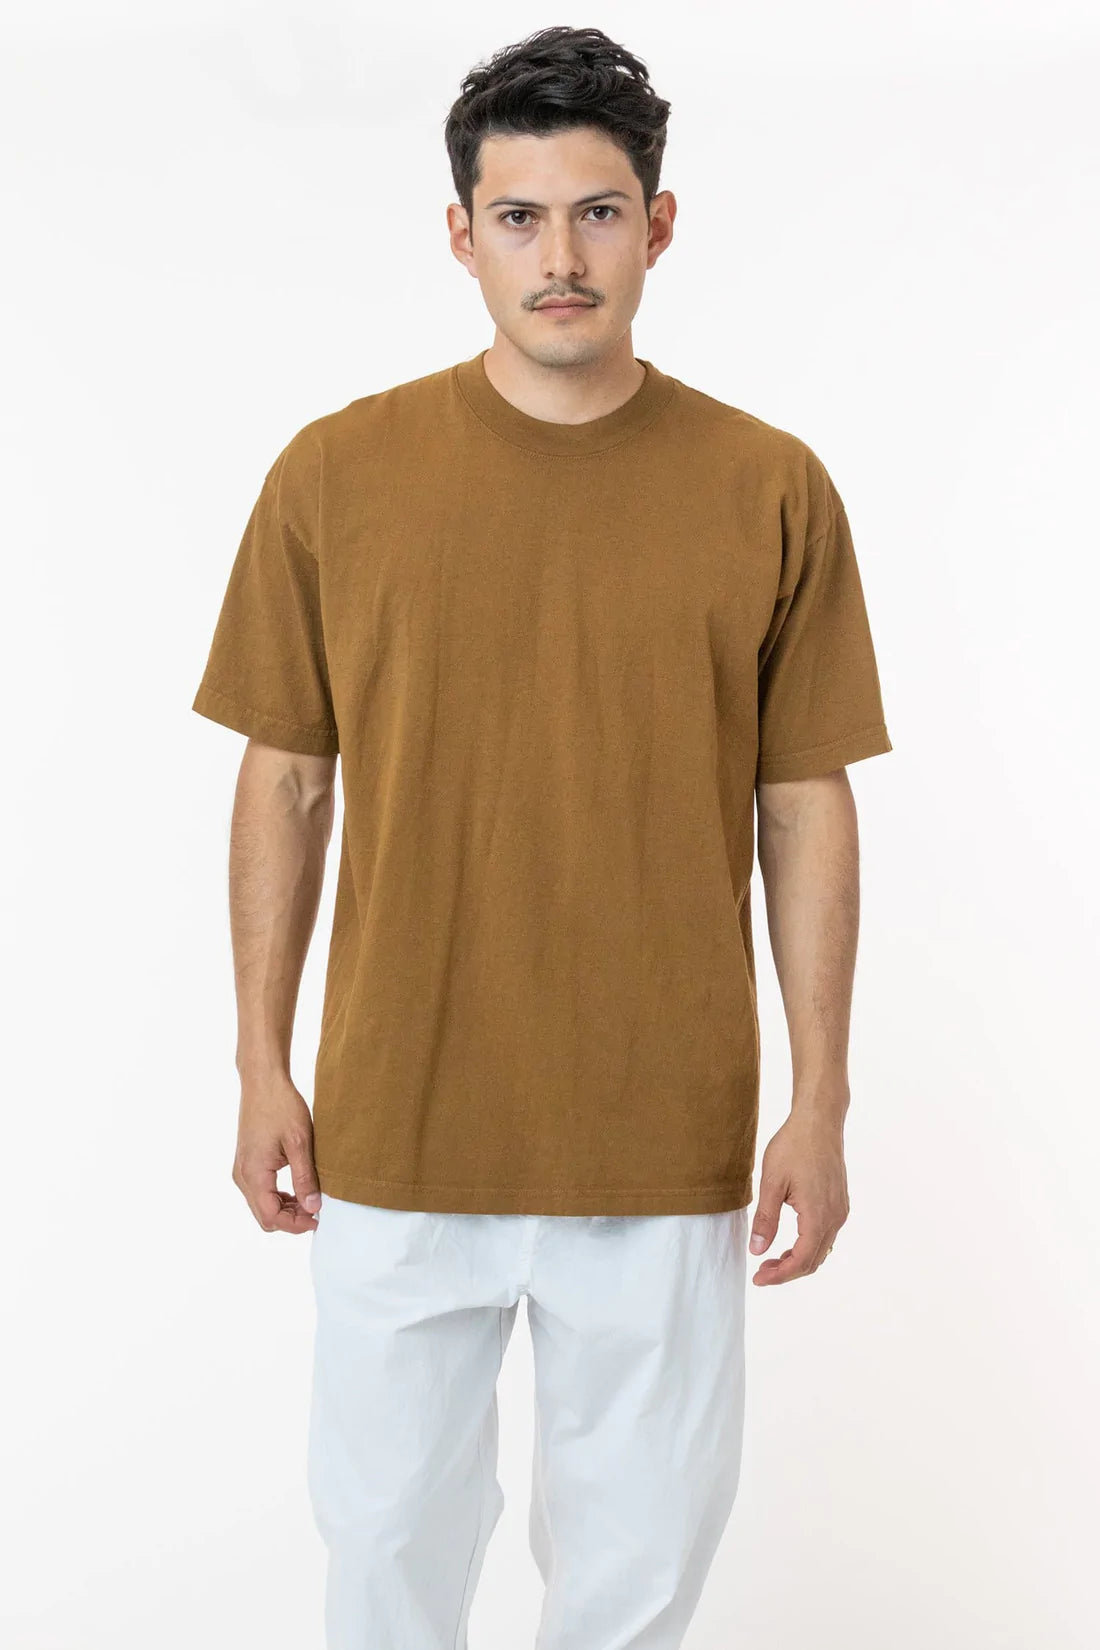 6.5 Oz. Garment Dye Crewneck T-Shirt - New Colors | Regular Size | LA Apparel